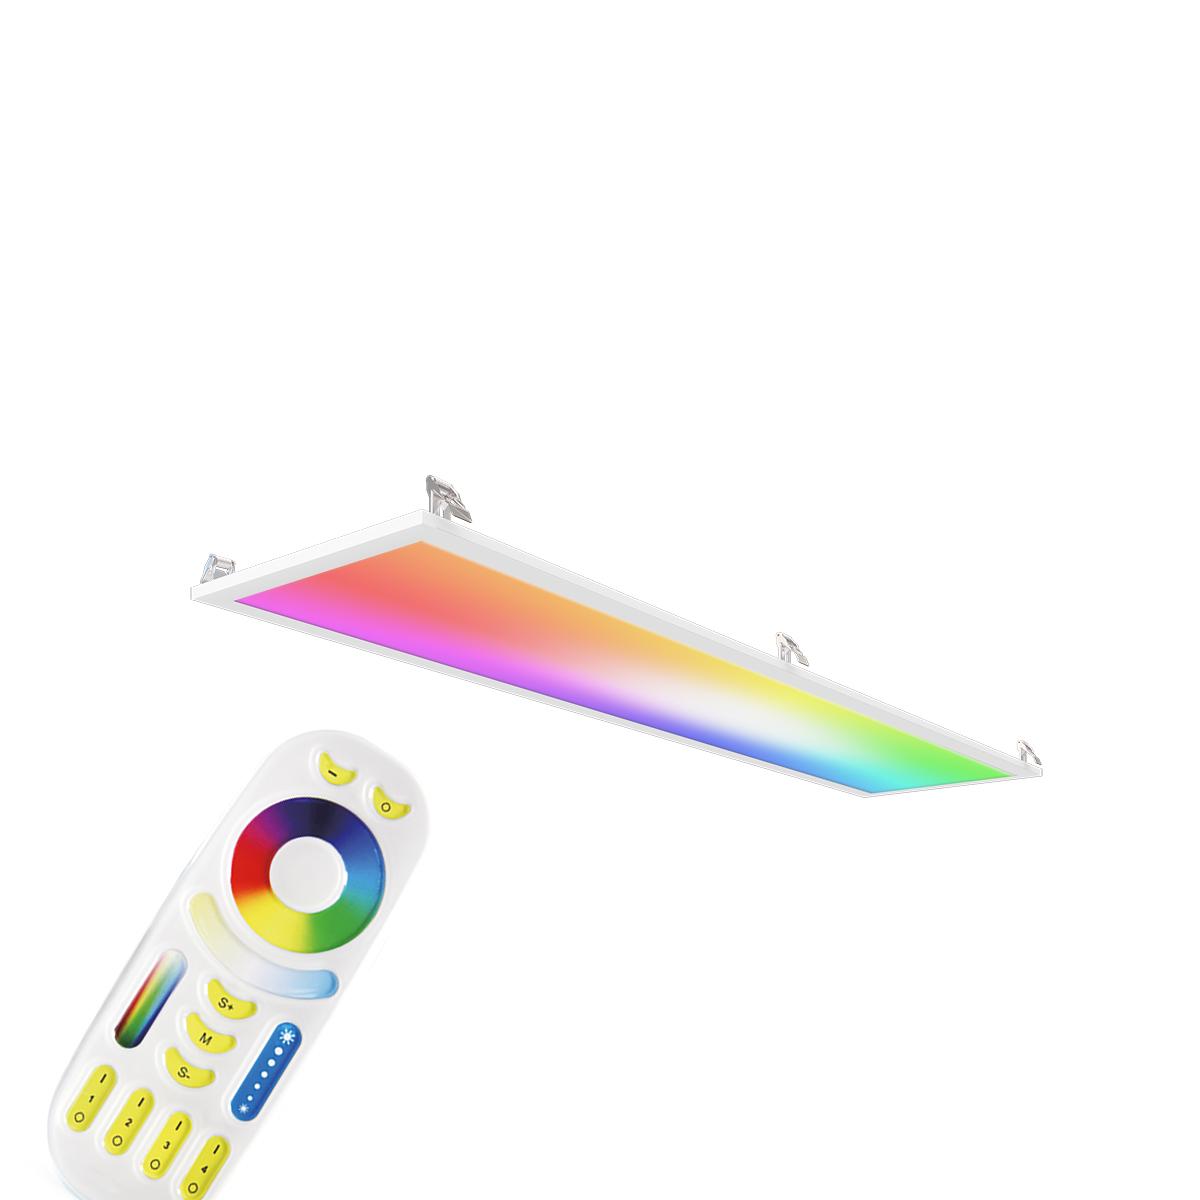 RGB+CCT LED Panel 120x30cm inkl. MiBoxer Smarthomesteuerung 48W 24V Rahmen weiß - Panelmontage:  Deckenhalterung Clips